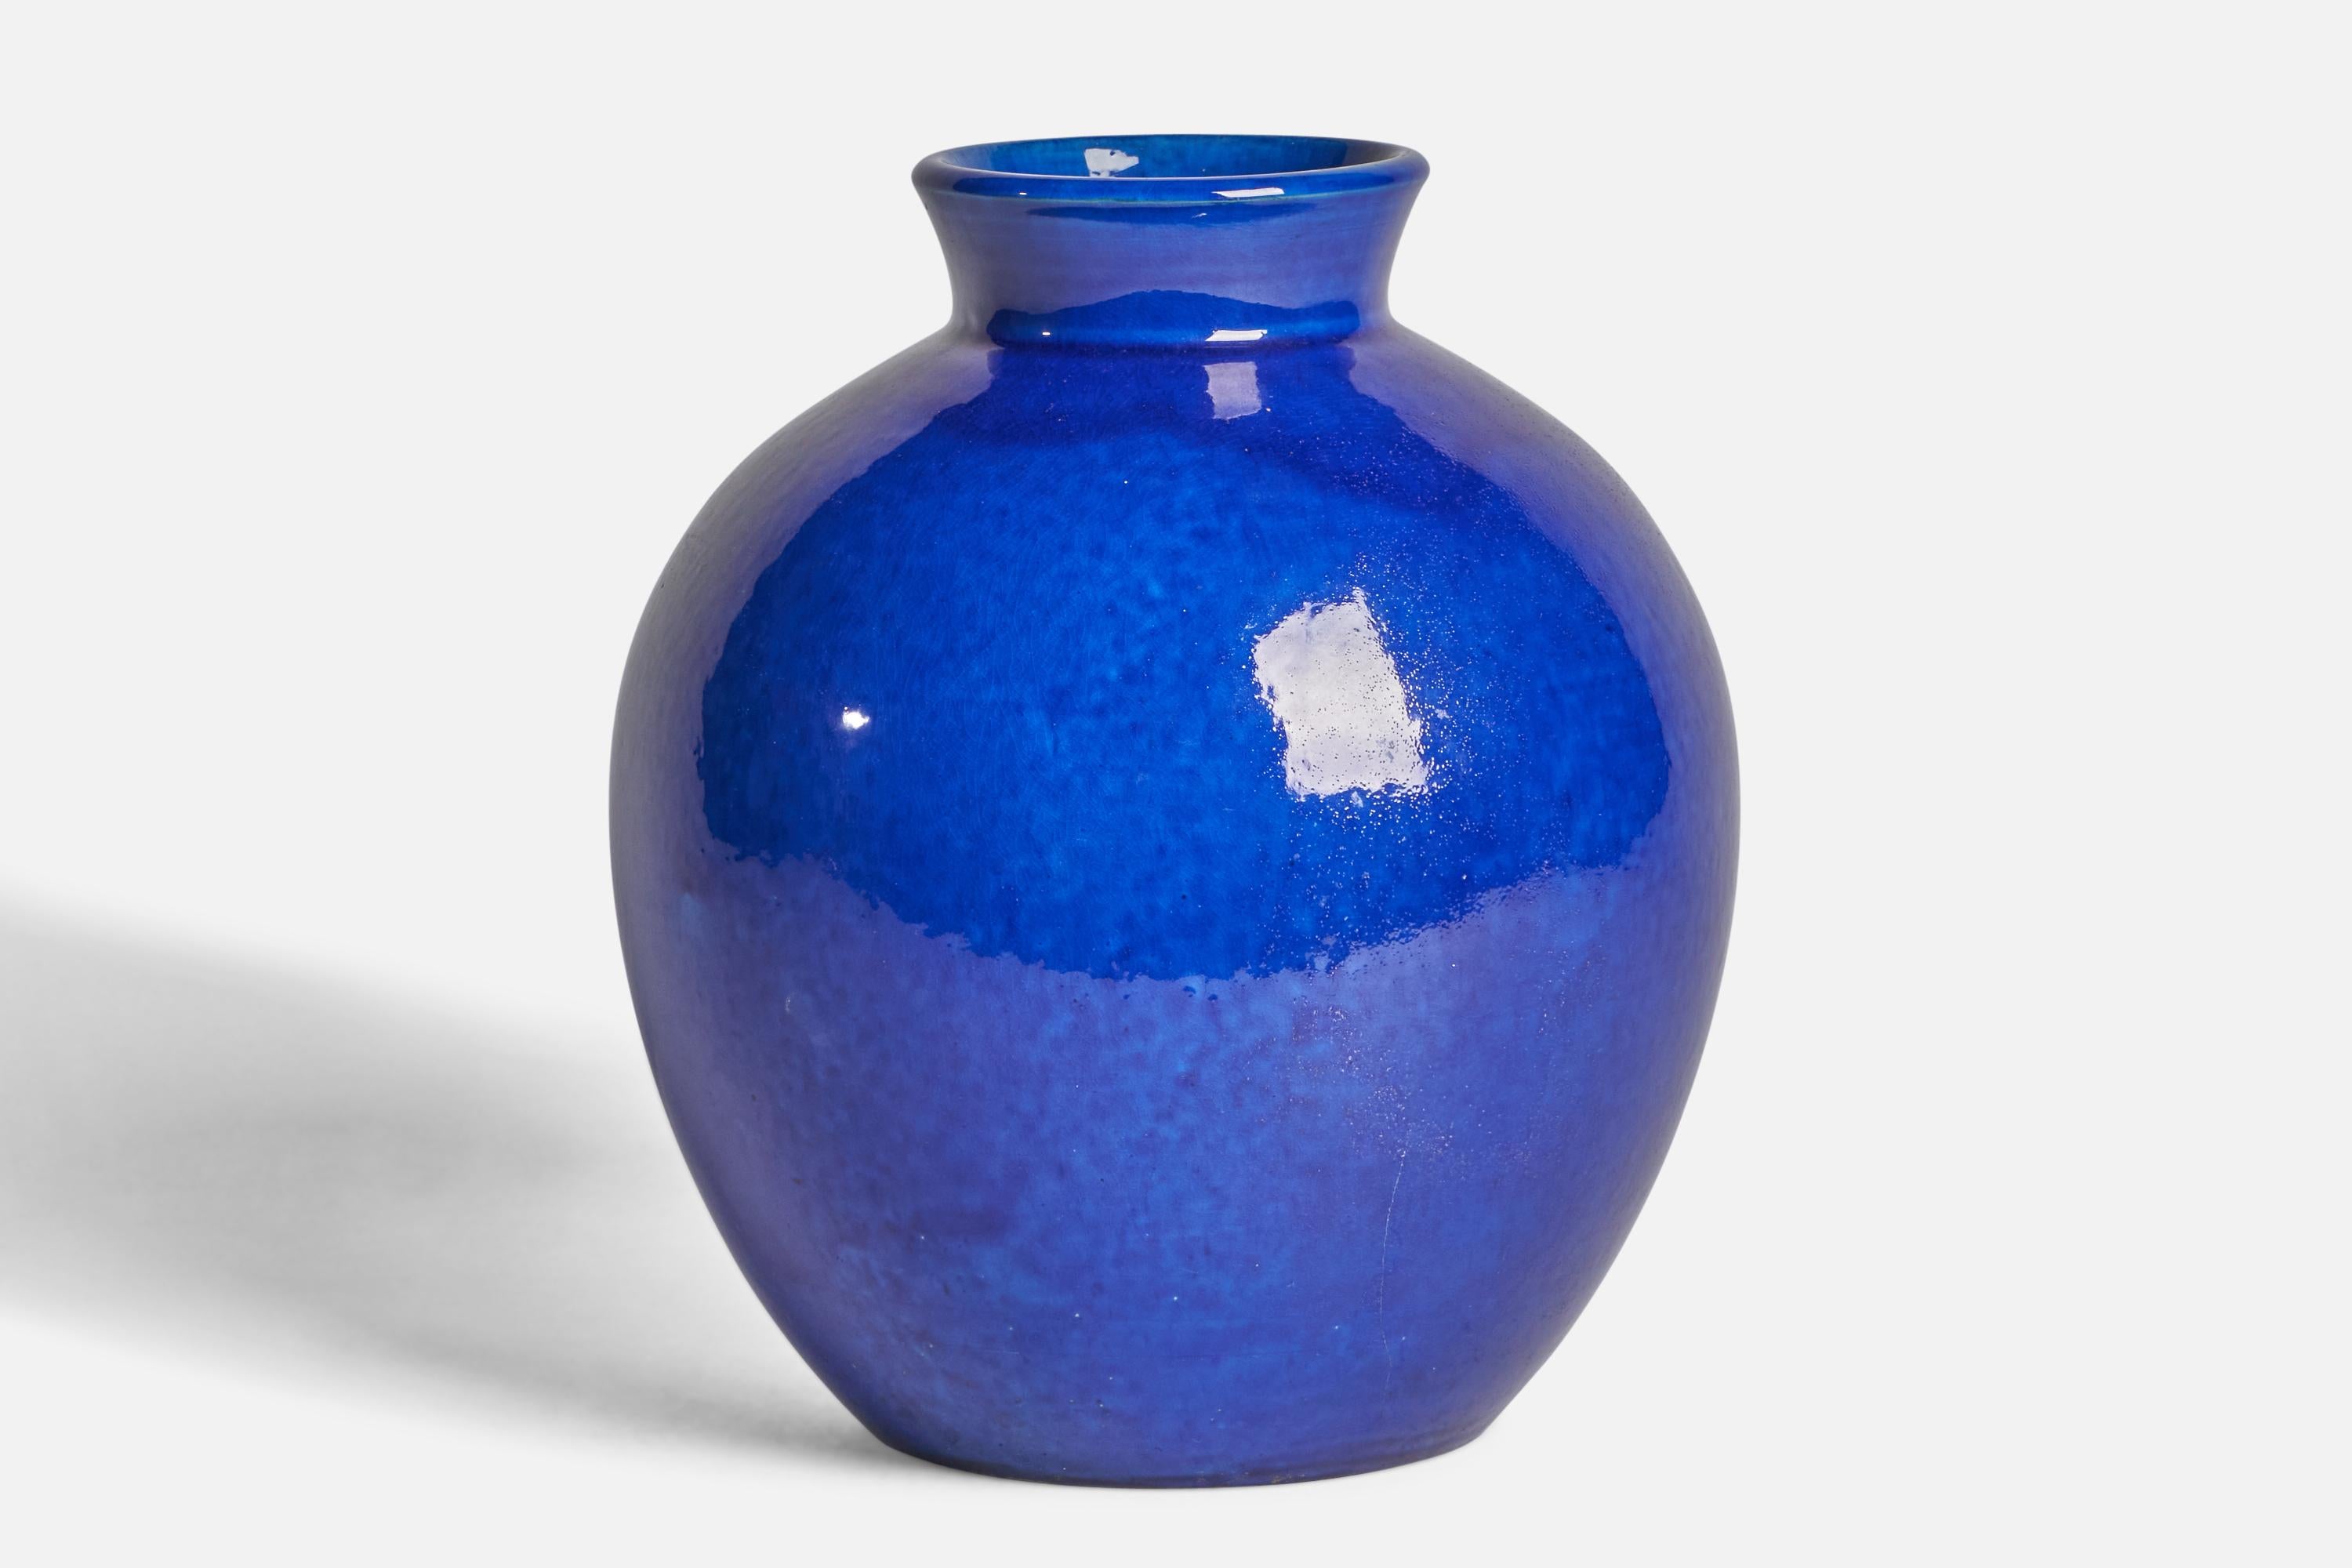 A large blue-glazed earthenware vase designed and produced by Herman Kähler, Denmark, c. 1920s.

“DENMARK” stamp on bottom
